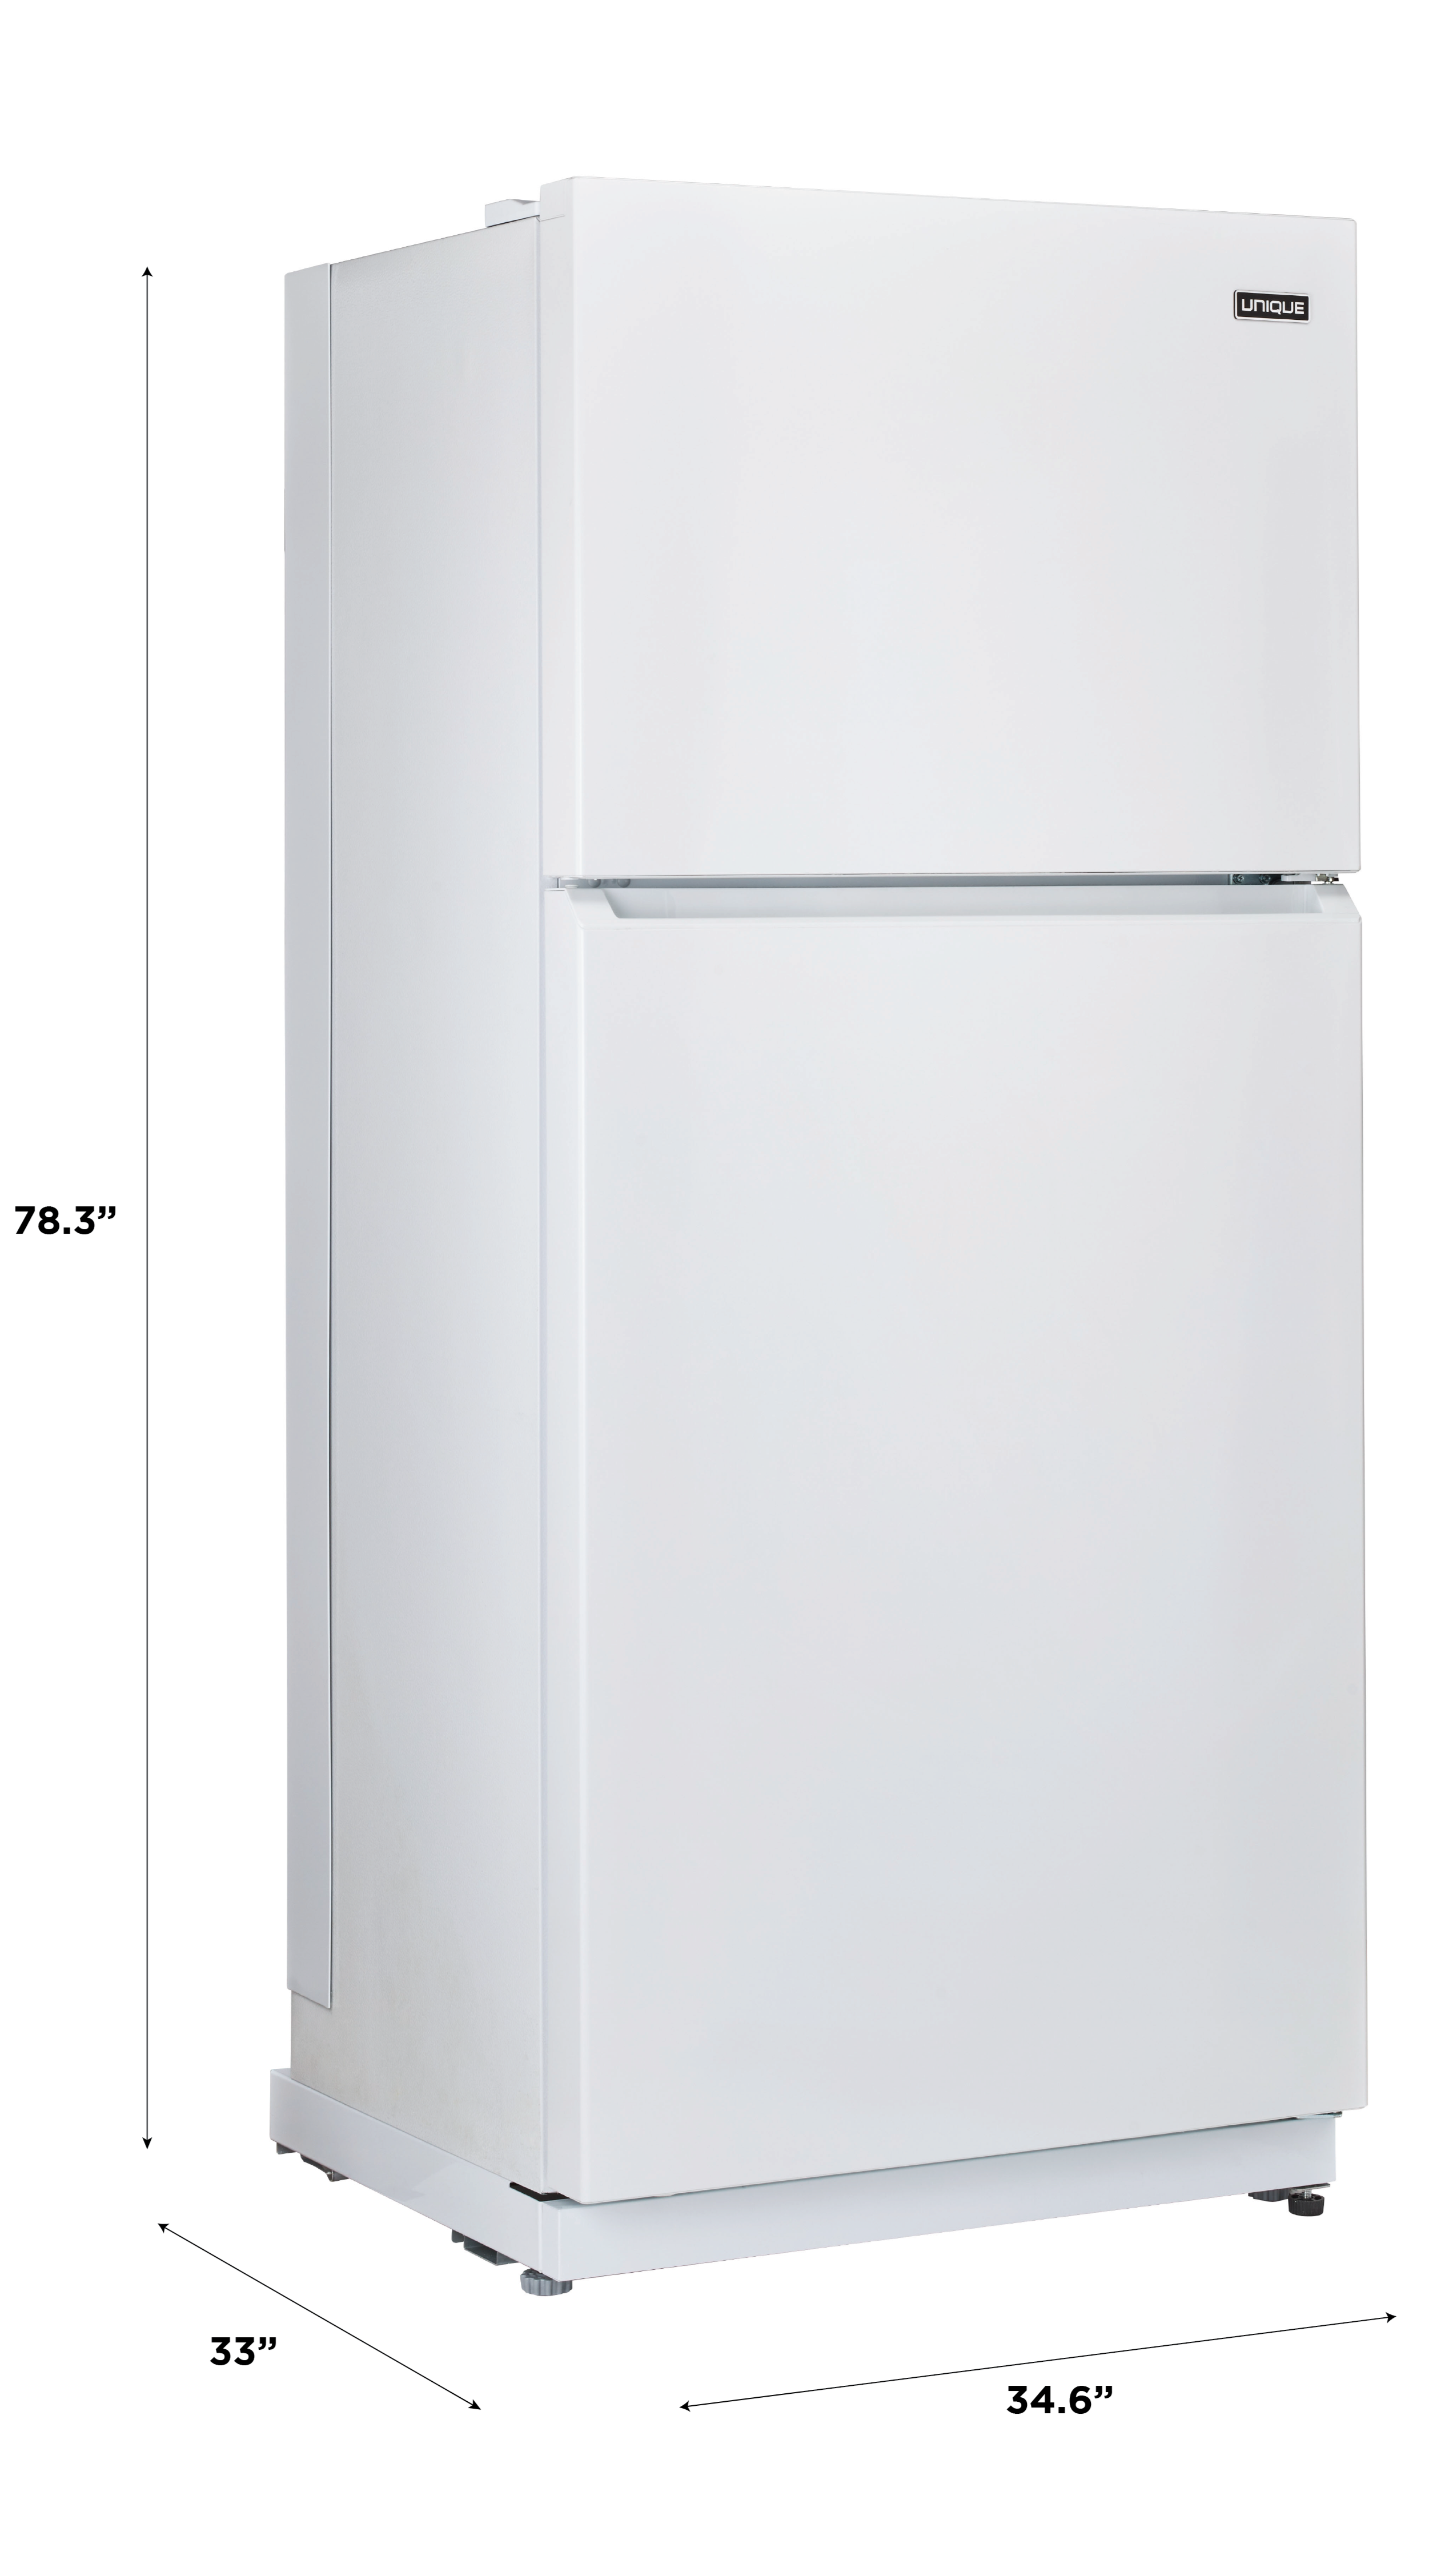 Unique Appliances - 34.6 Inch 19 cu. ft Top Mount Refrigerator in White - UGP-19C CM W